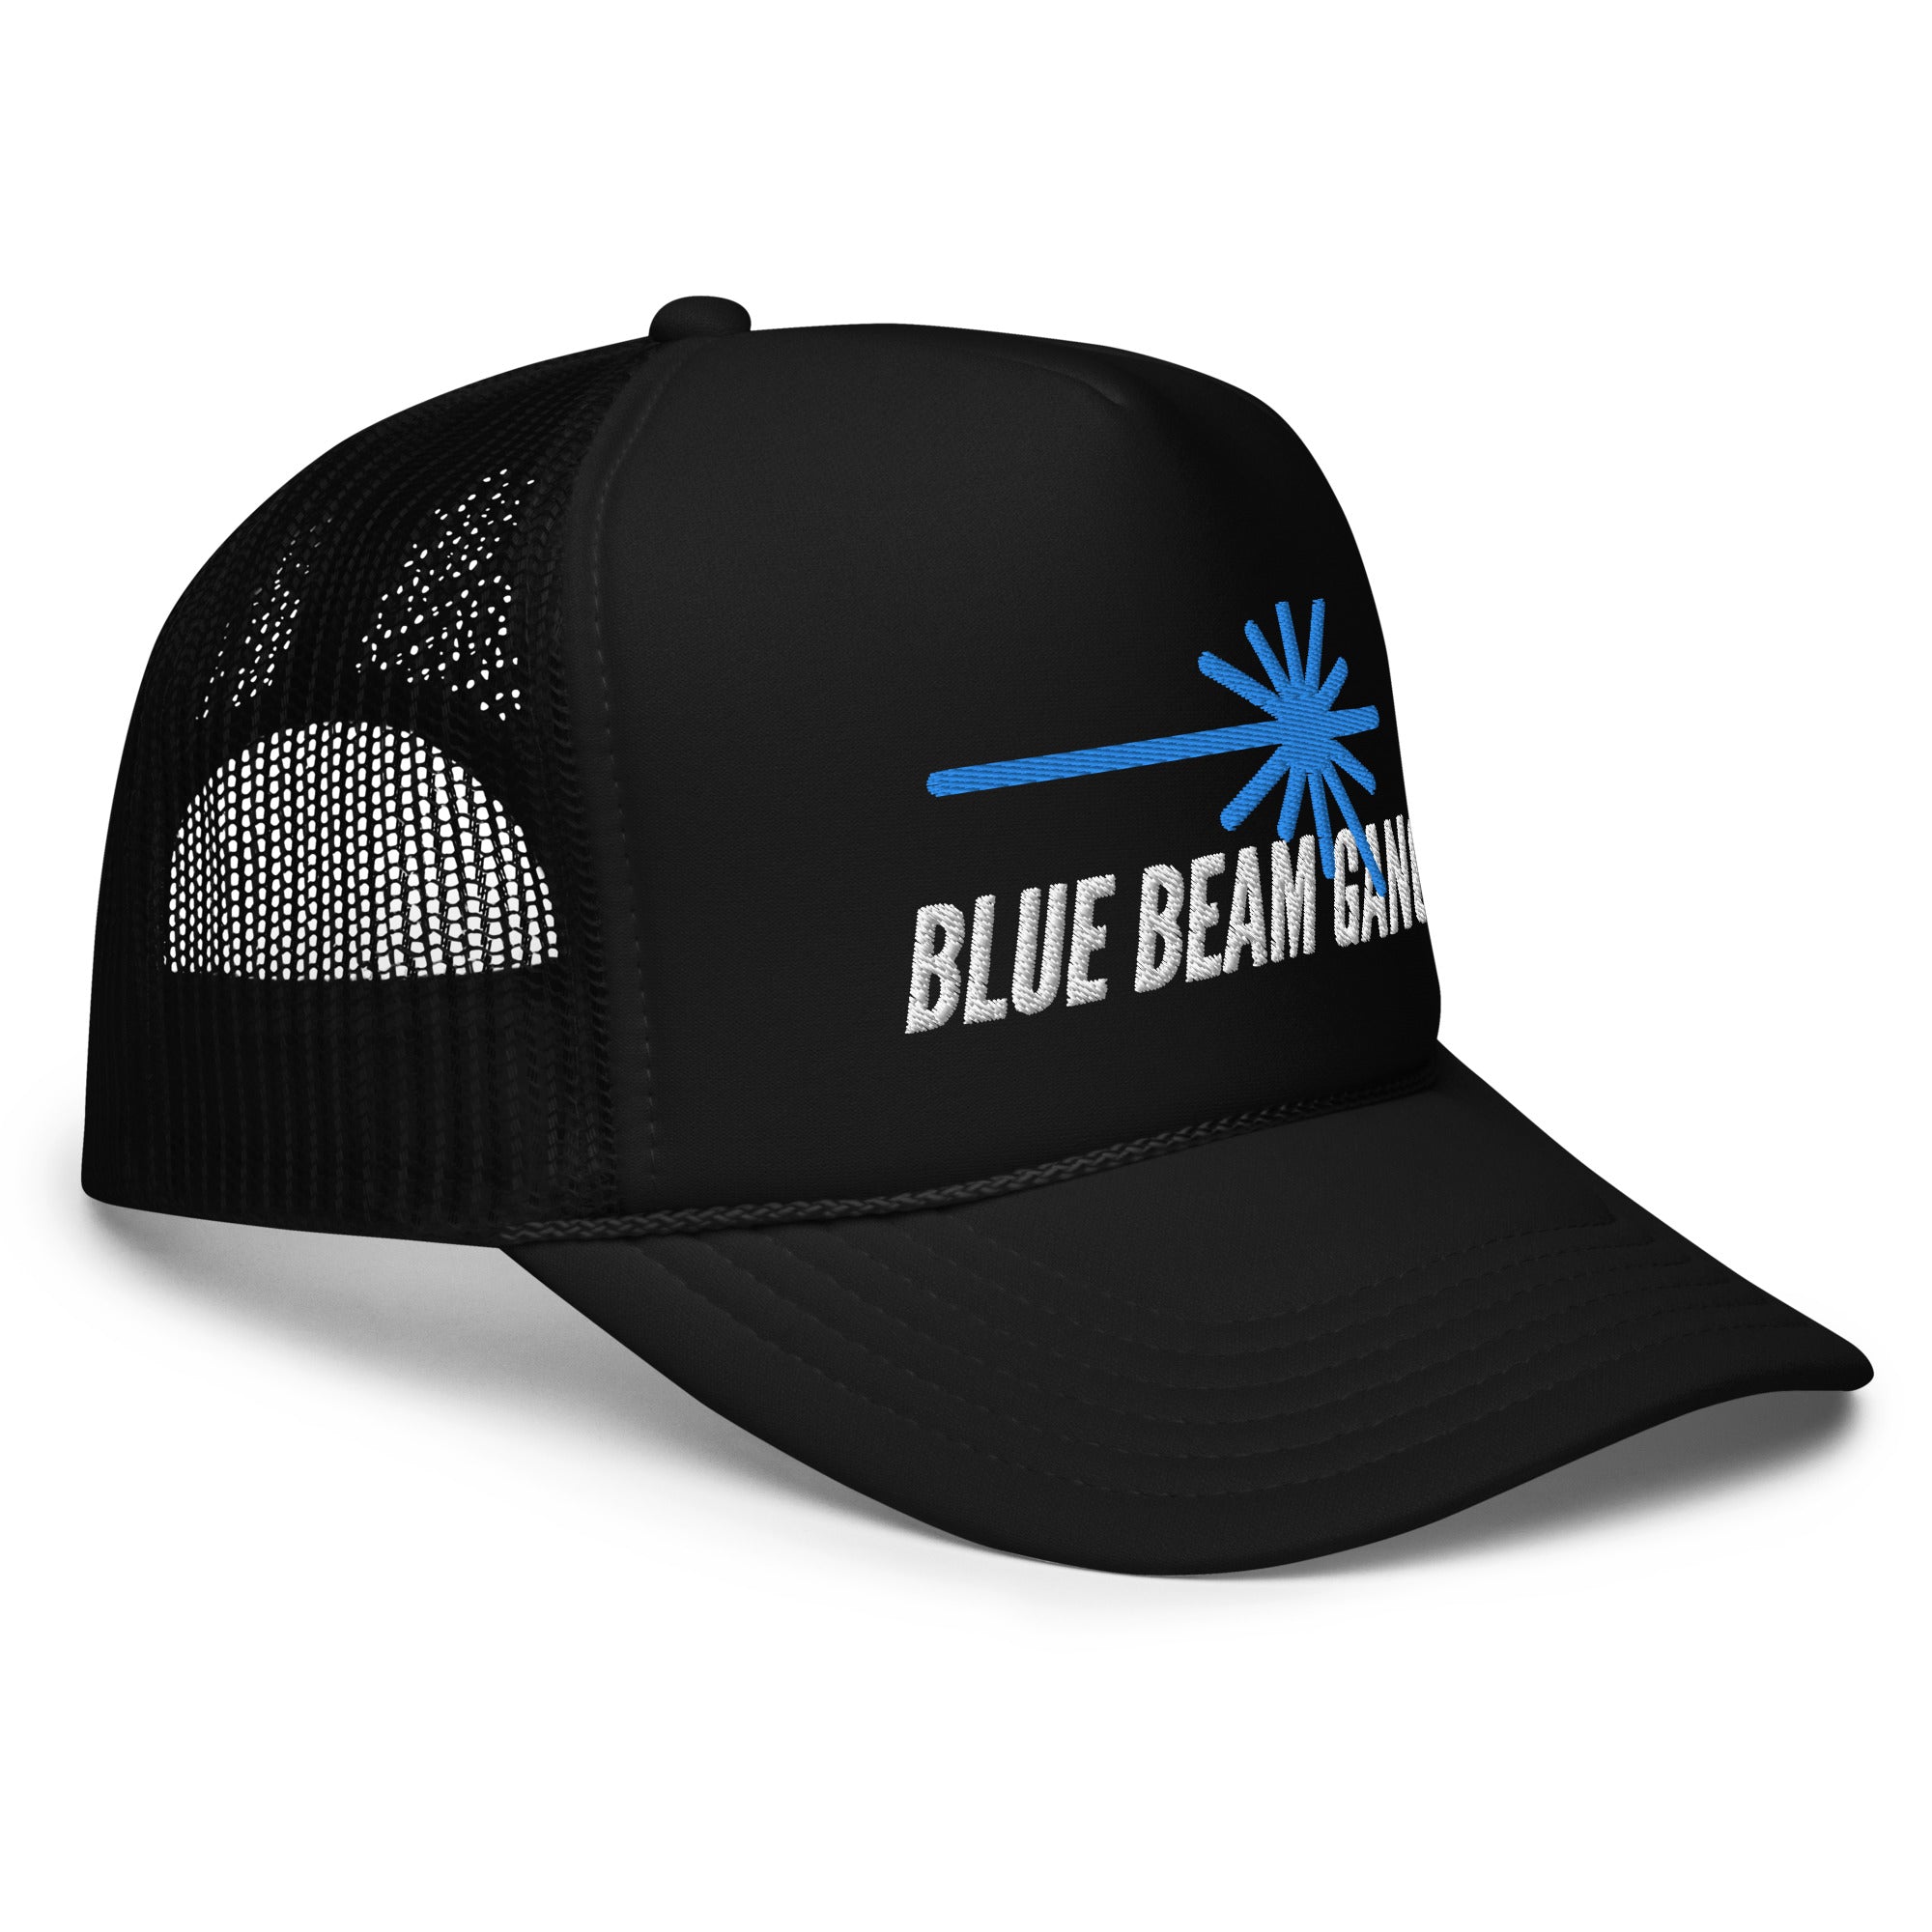 Blue Beam Gang Foam trucker hat